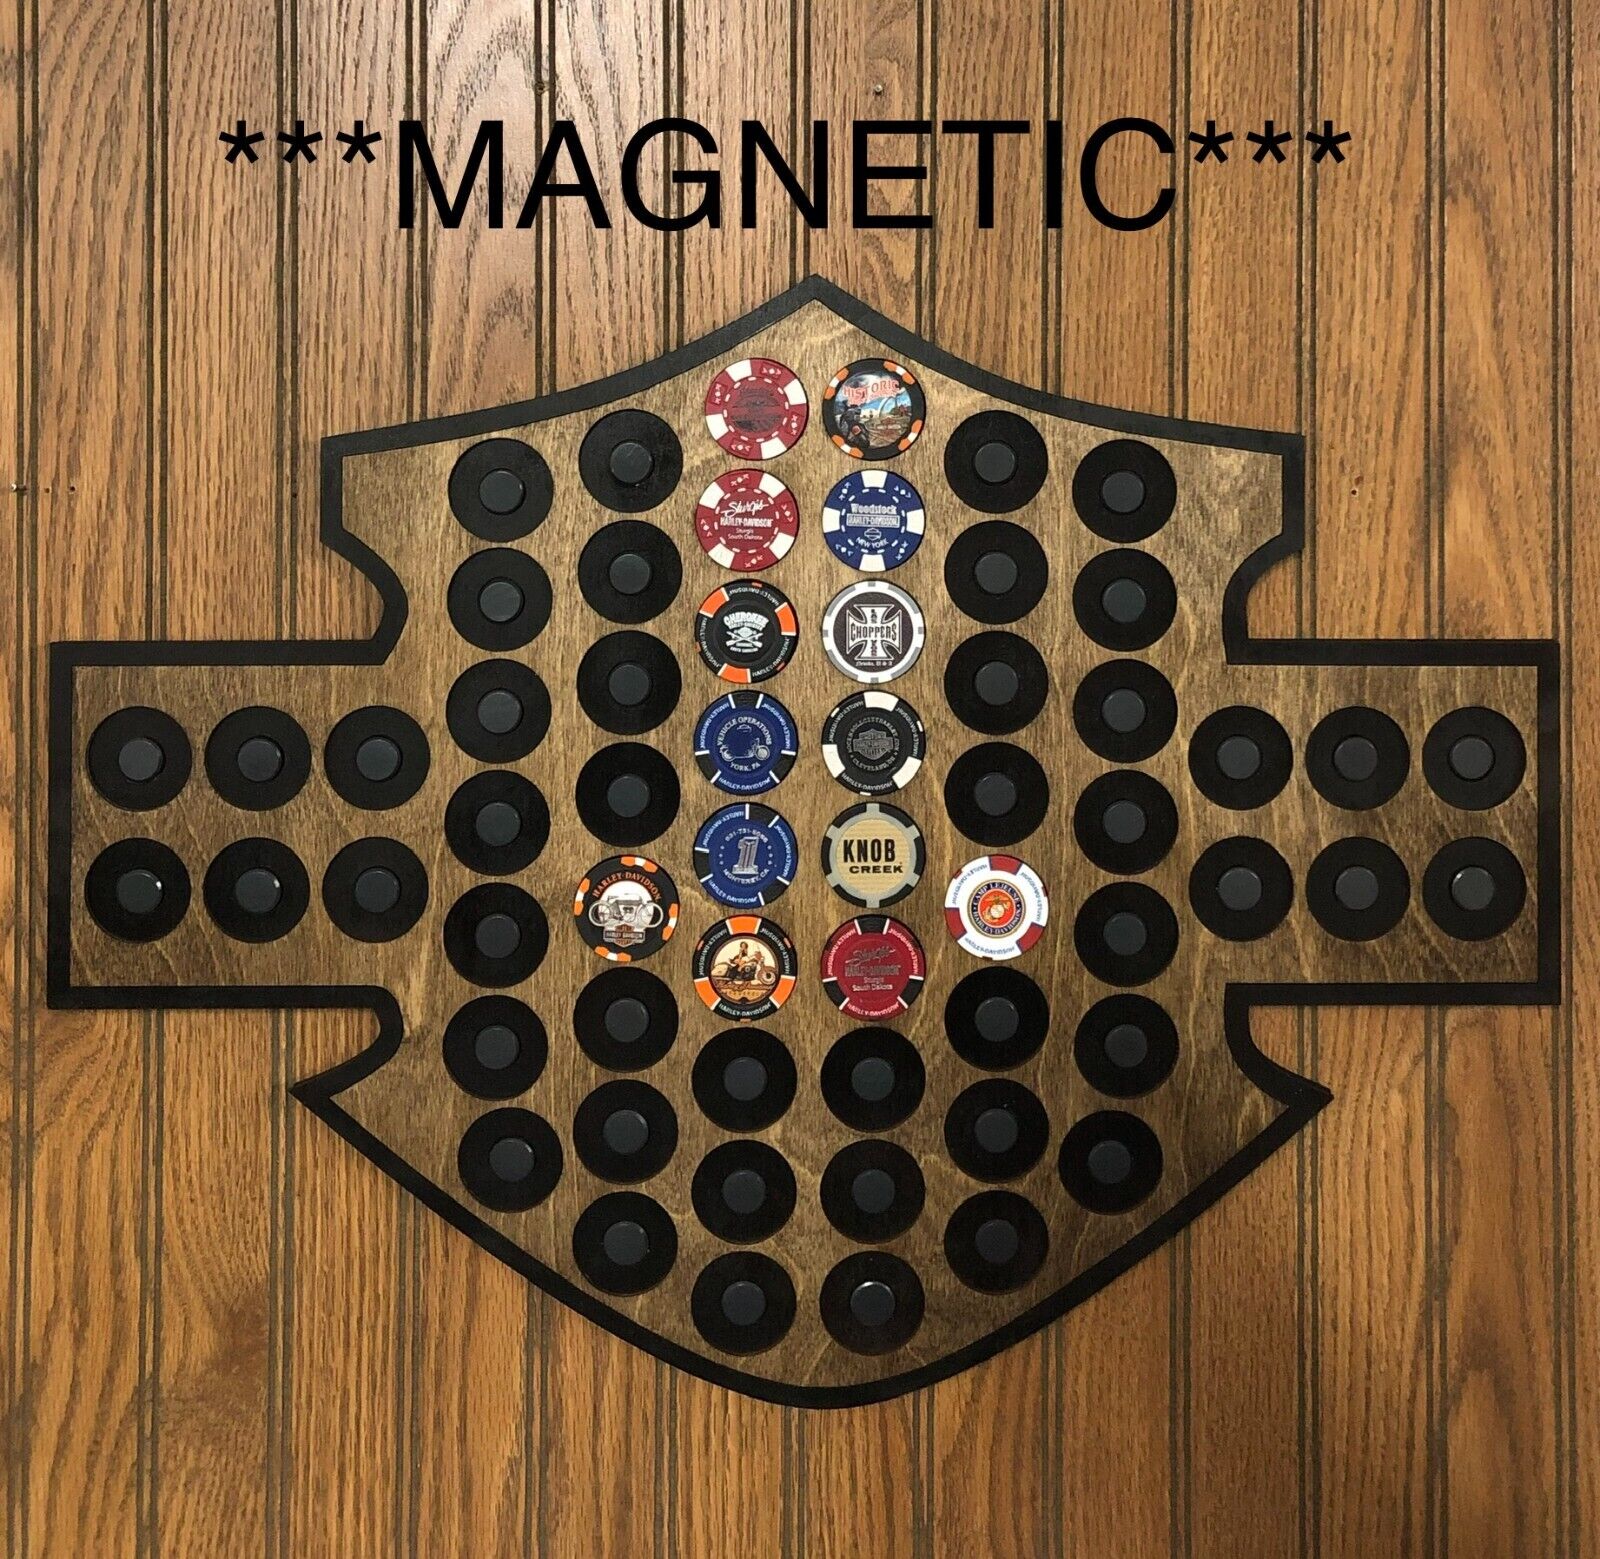 Magnetic Harley Poker Chip Display